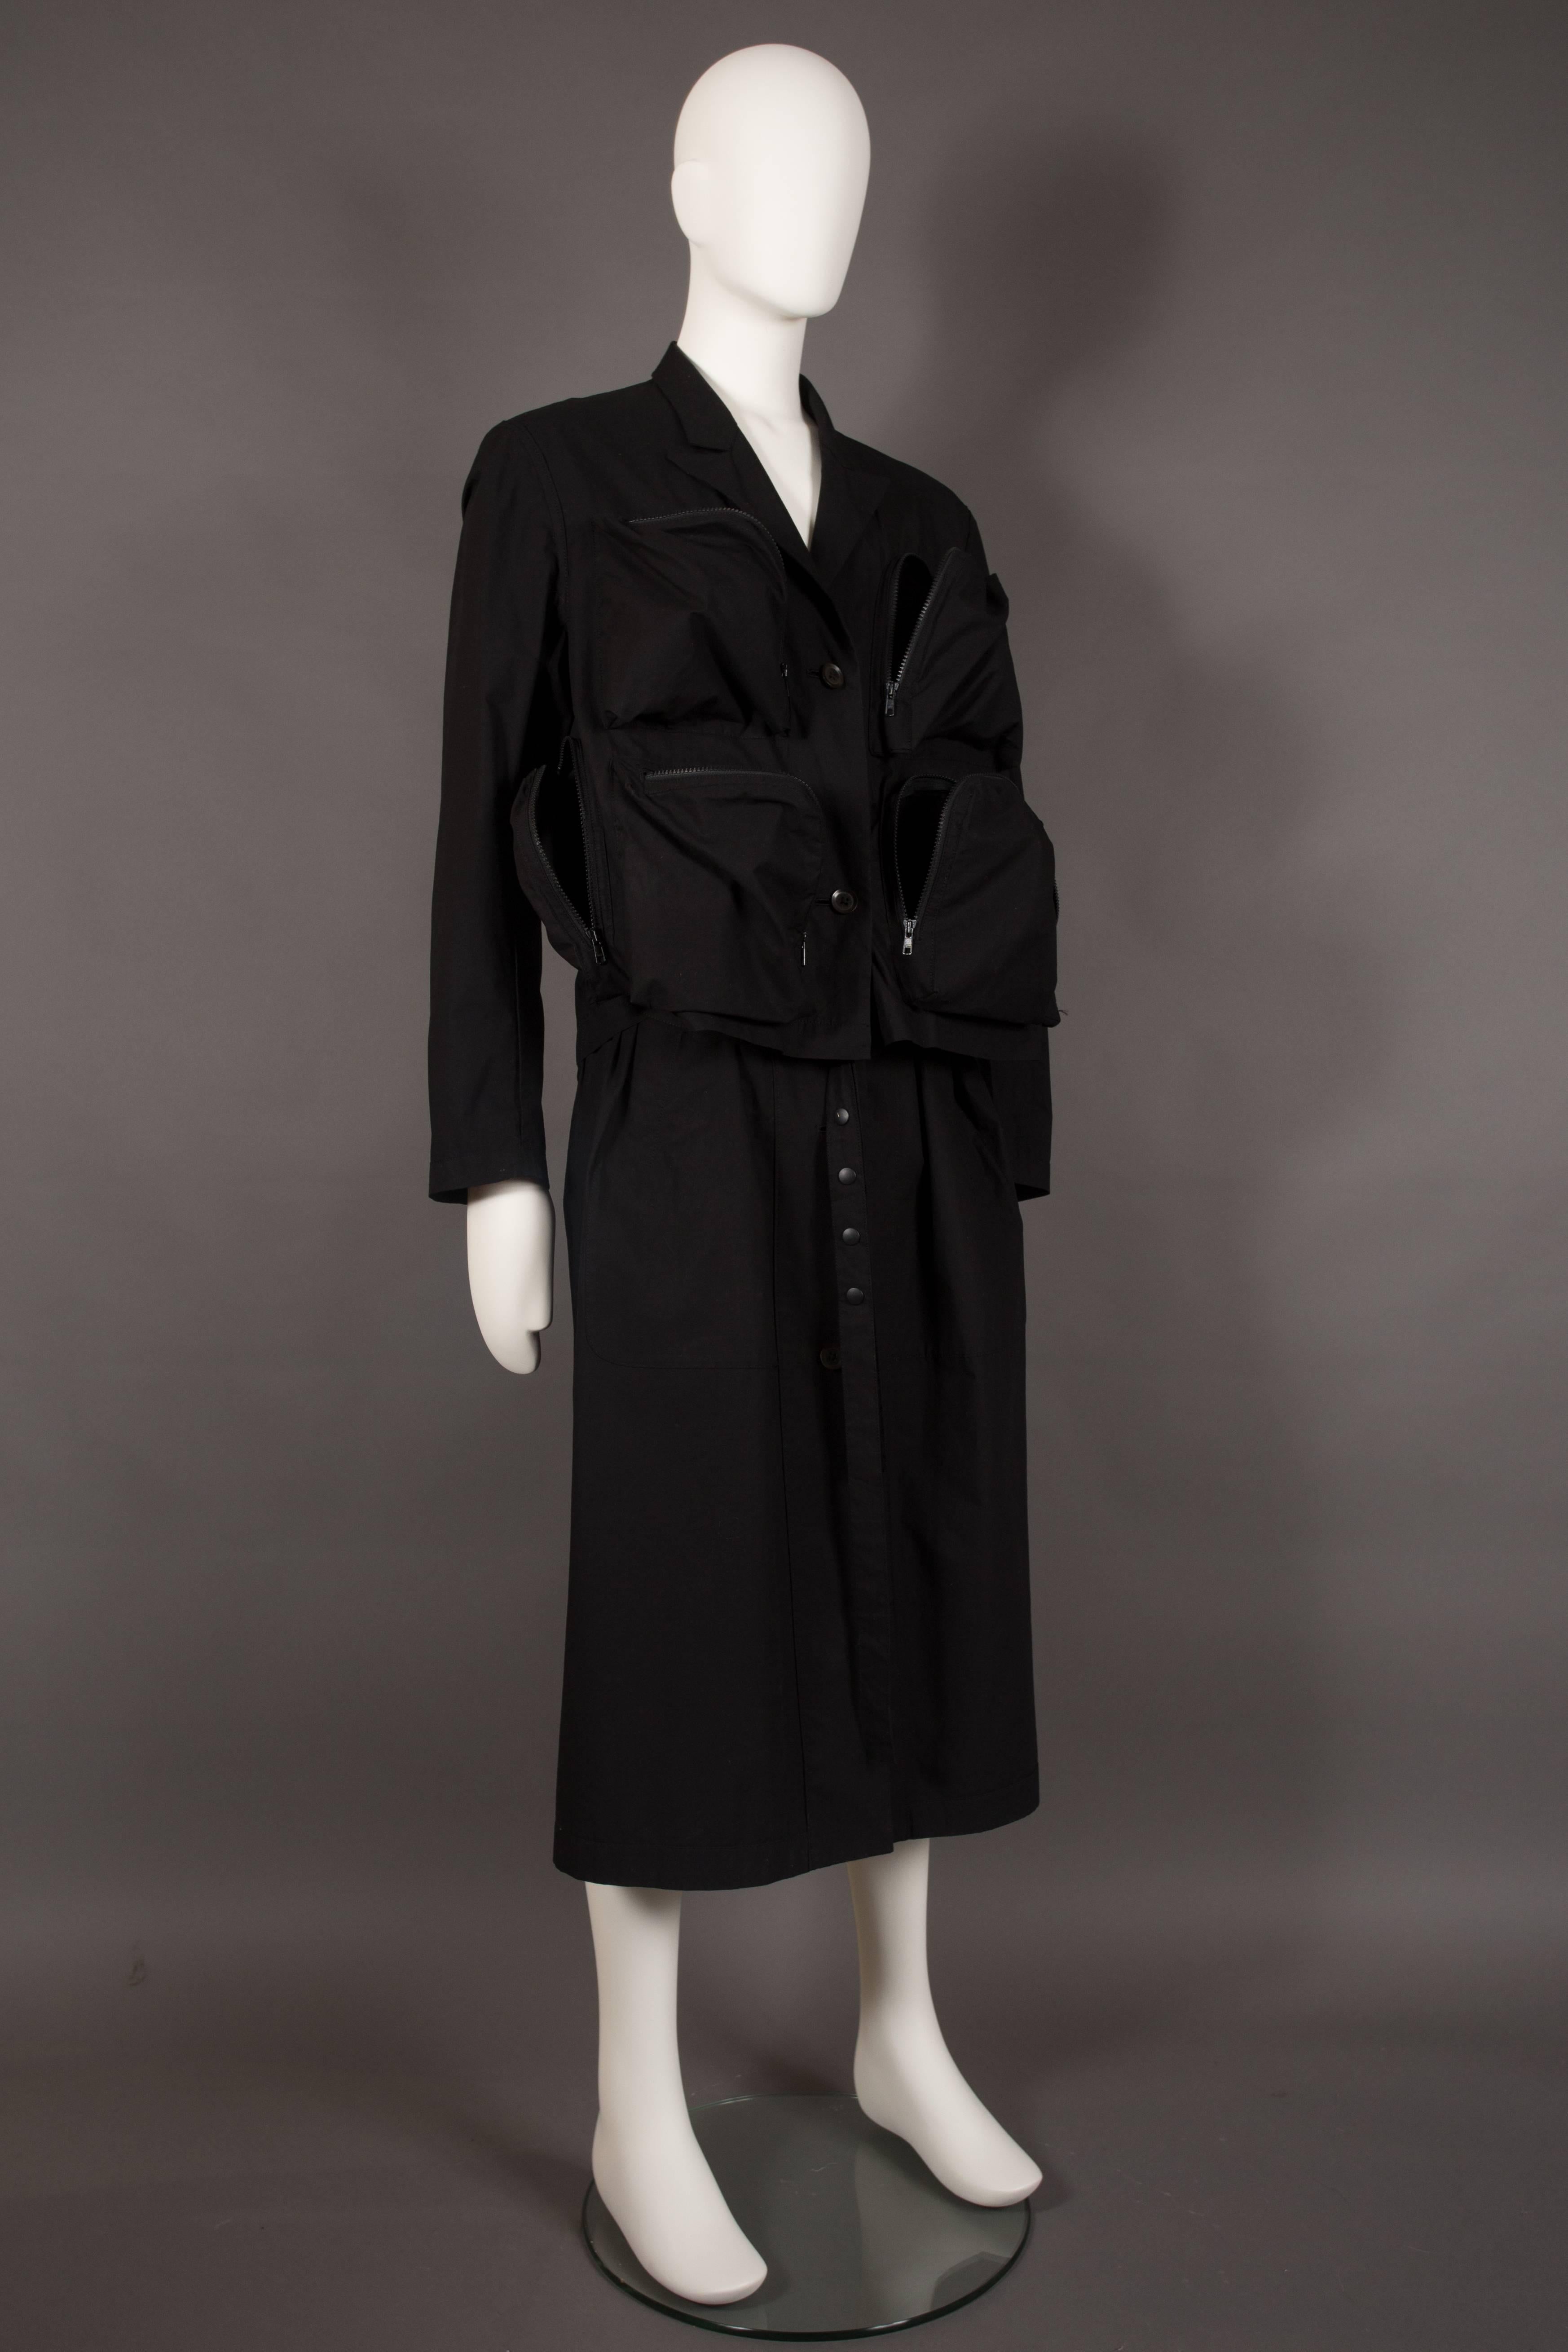 Men's Yohji Yamamoto POUR HOMME black oversized multi-pocket military coat, circa 2006